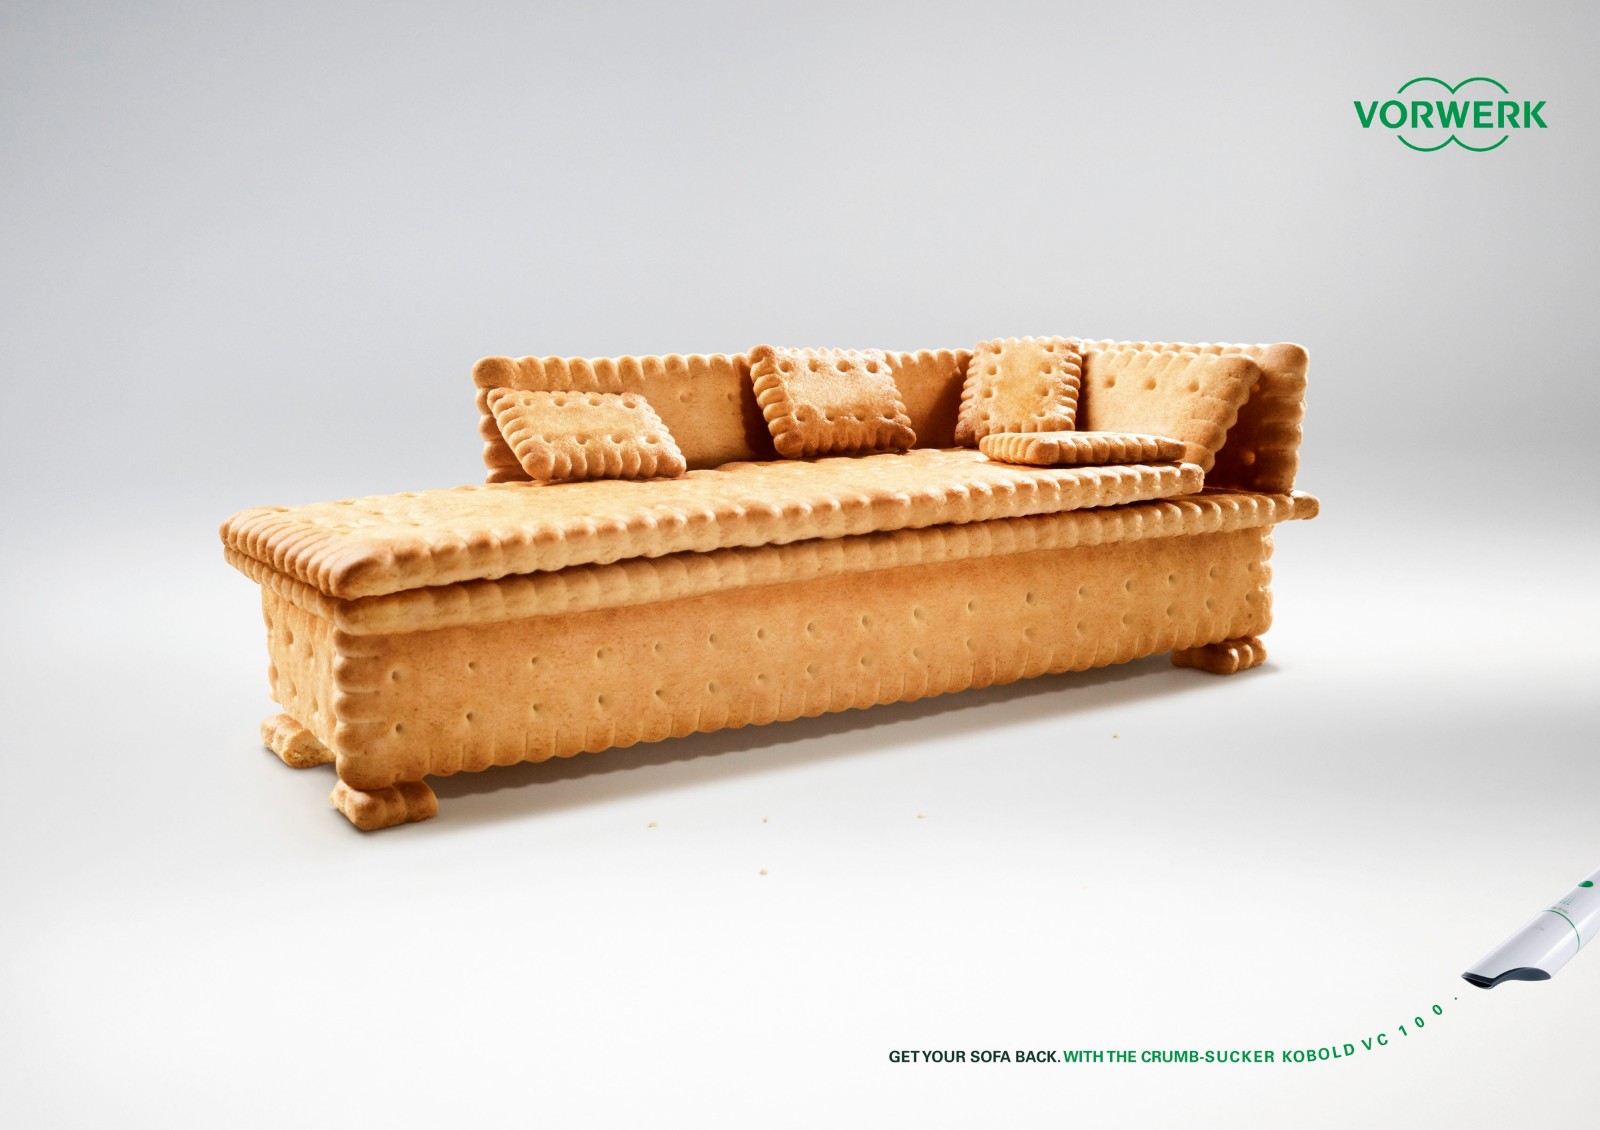 vorwerk吸尘器德国福维克广告设计:饼干沙发